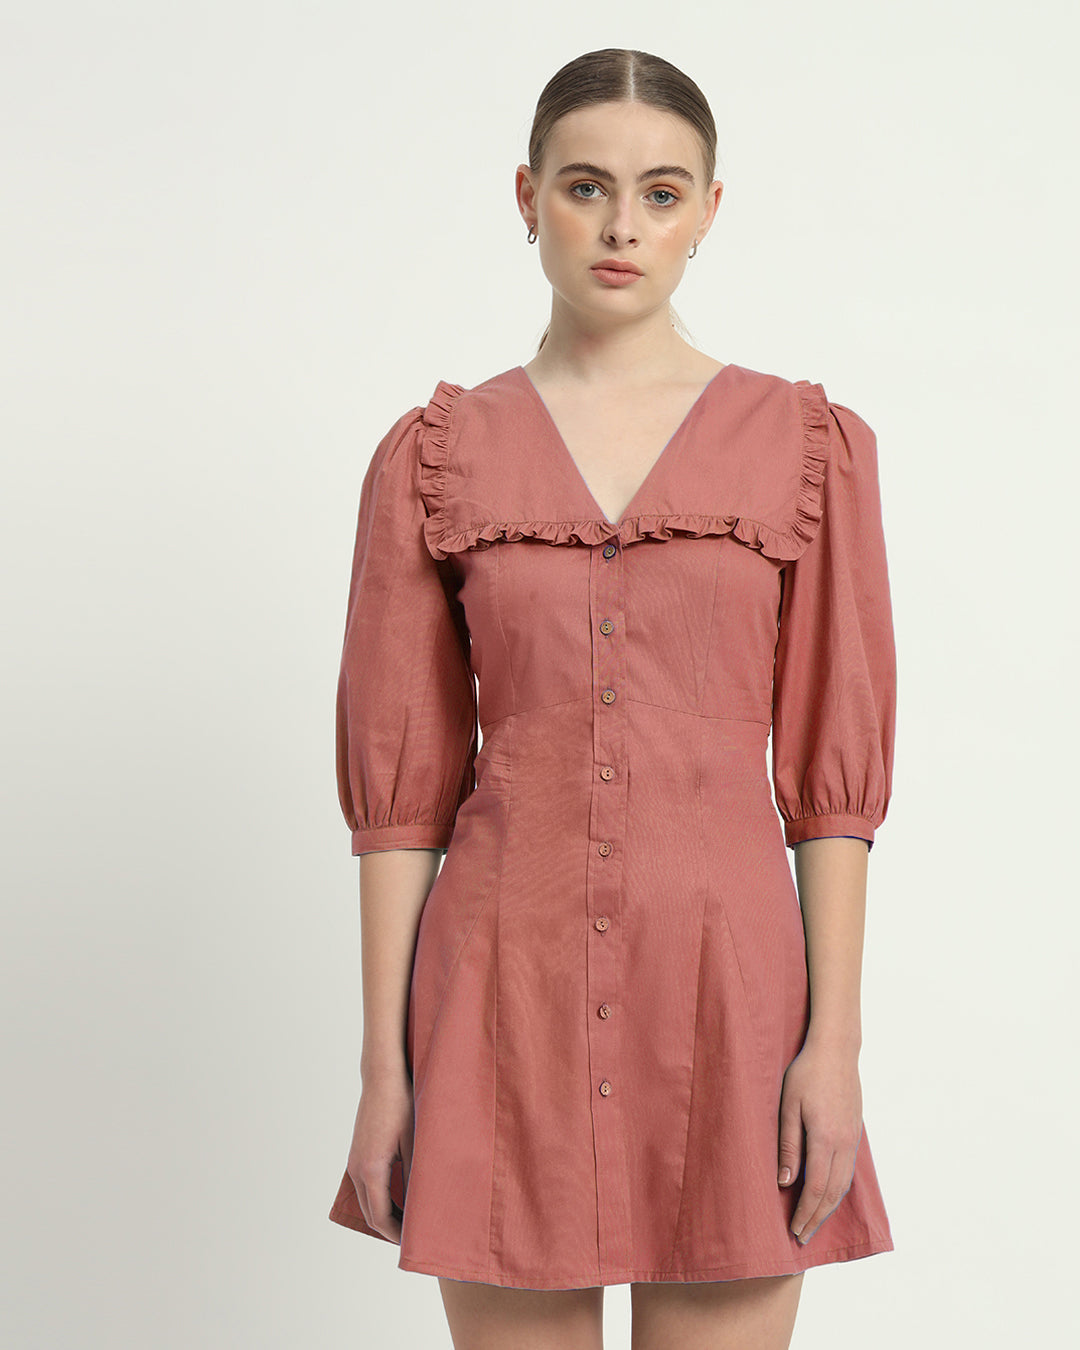 The Ivory Pink Isabela Cotton Dress